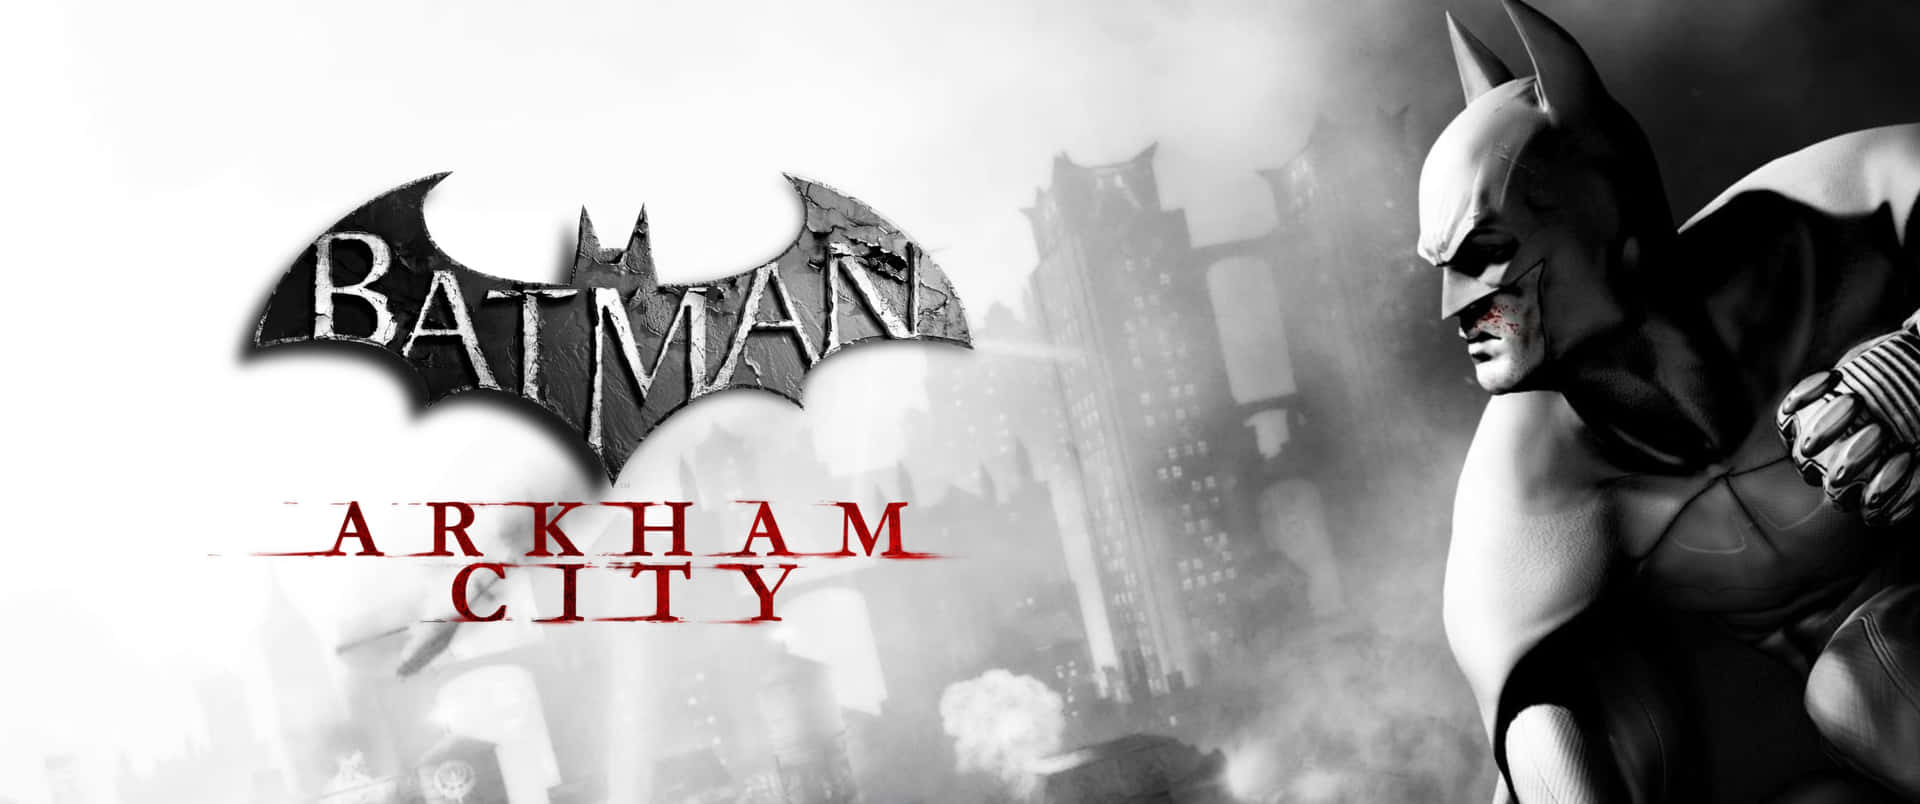 Batman Is Back in Action in Arkham City